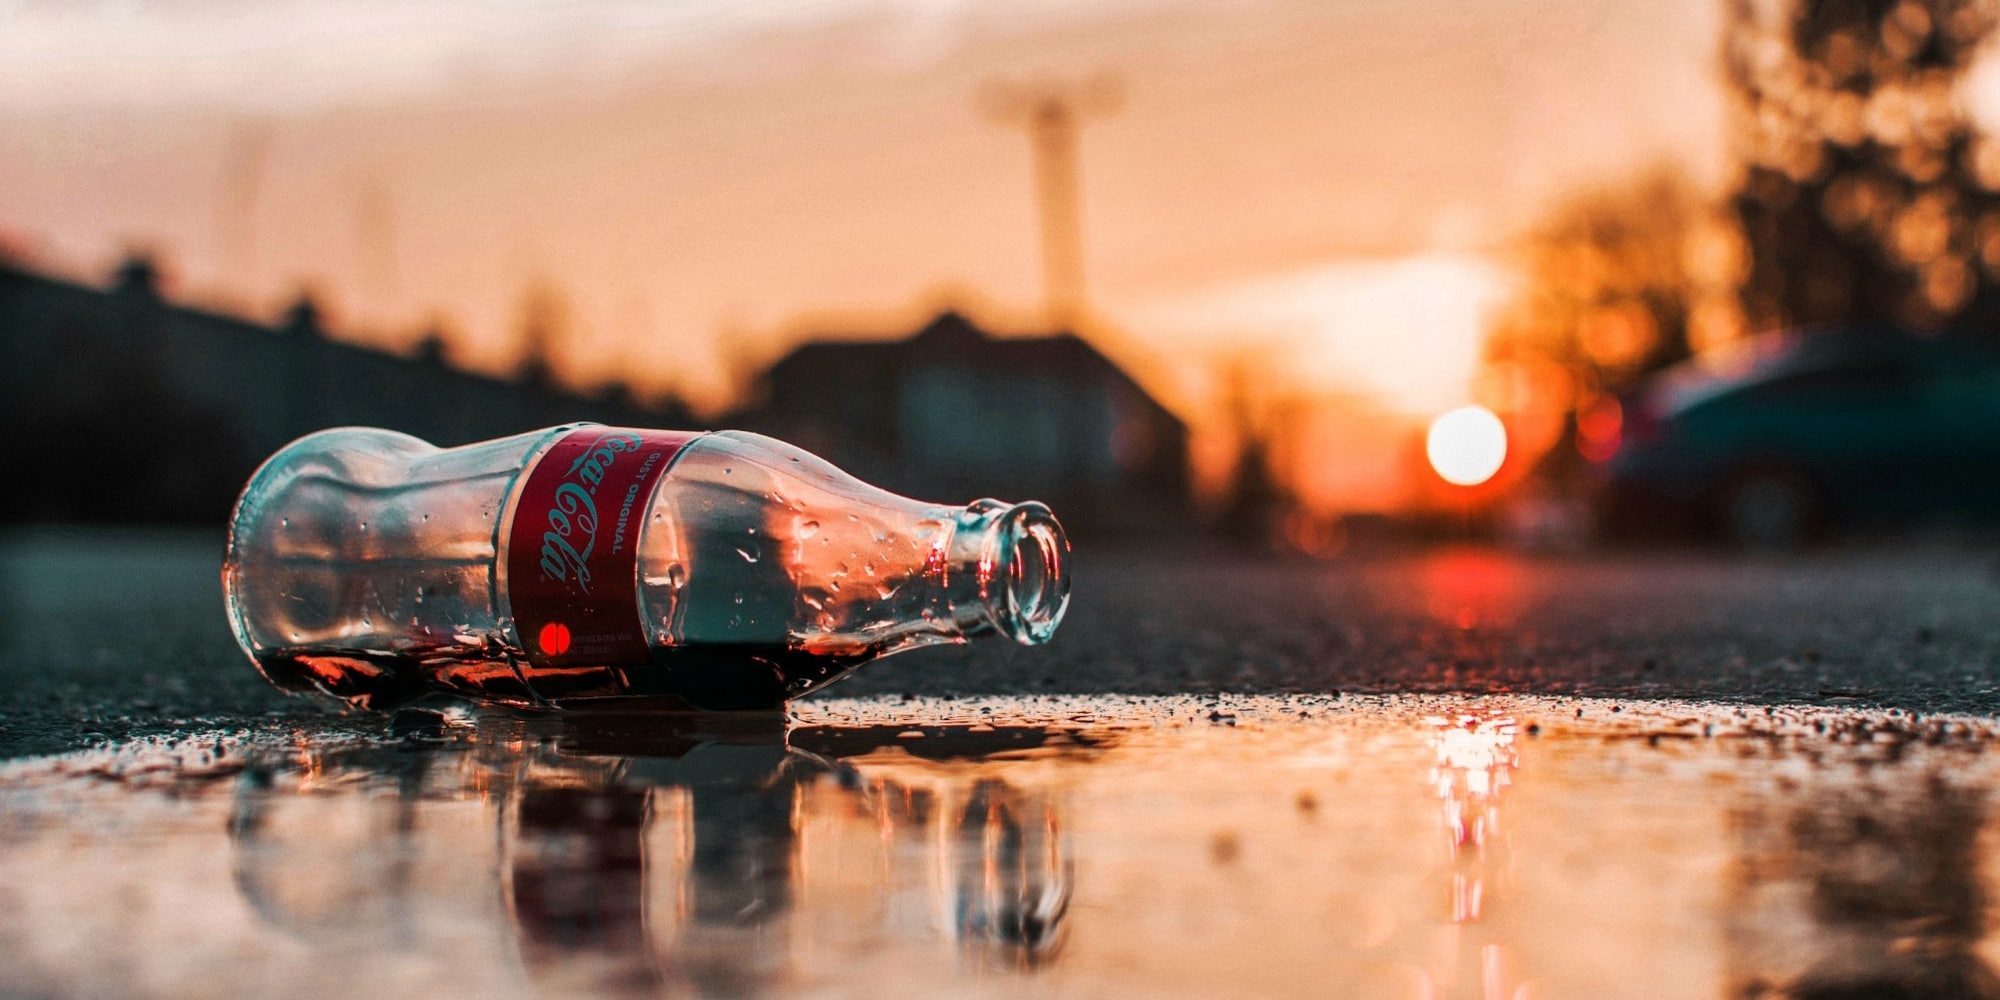 mpoukali coca cola petameno - Η μυστική συμφωνία της Coca-Cola με την DEA: Παράγει καθαρή κοκαΐνη αξίας 2 δισεκ. δολαρίων ετησίως